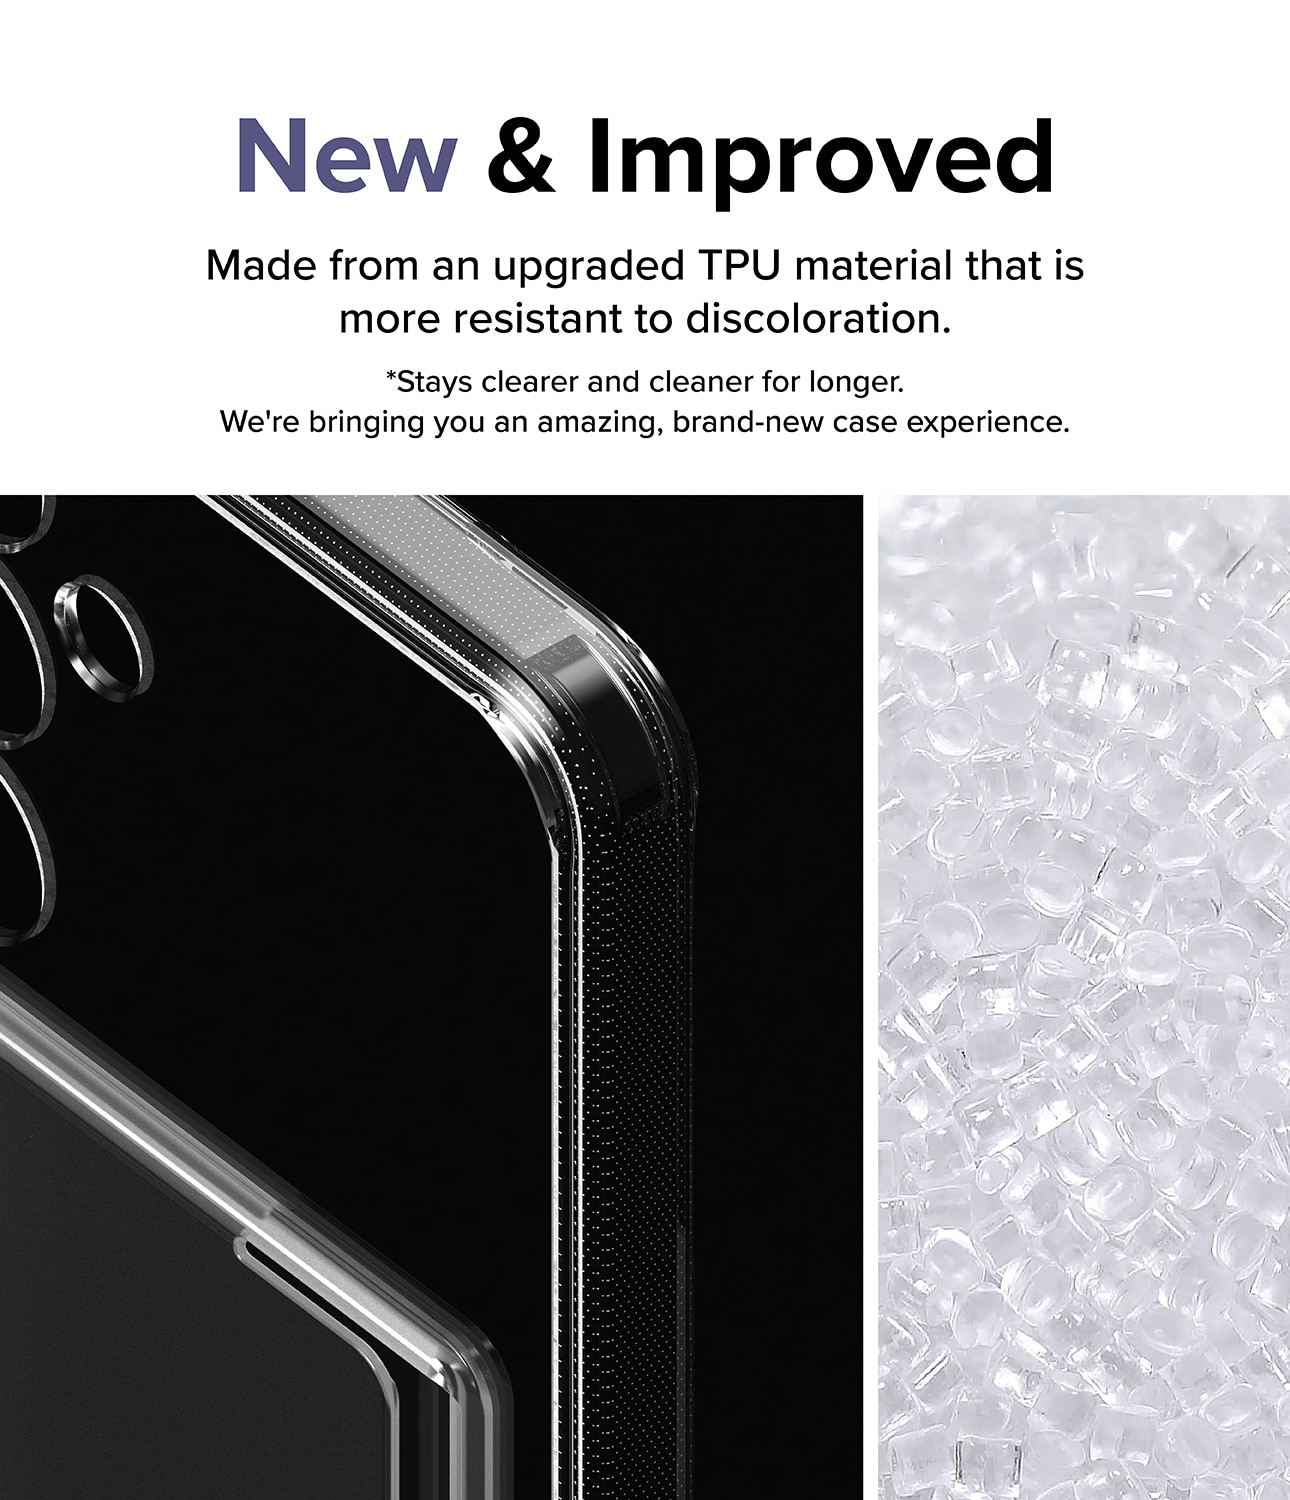 Cover Fusion Card Samsung Galaxy S24 Plus trasparente